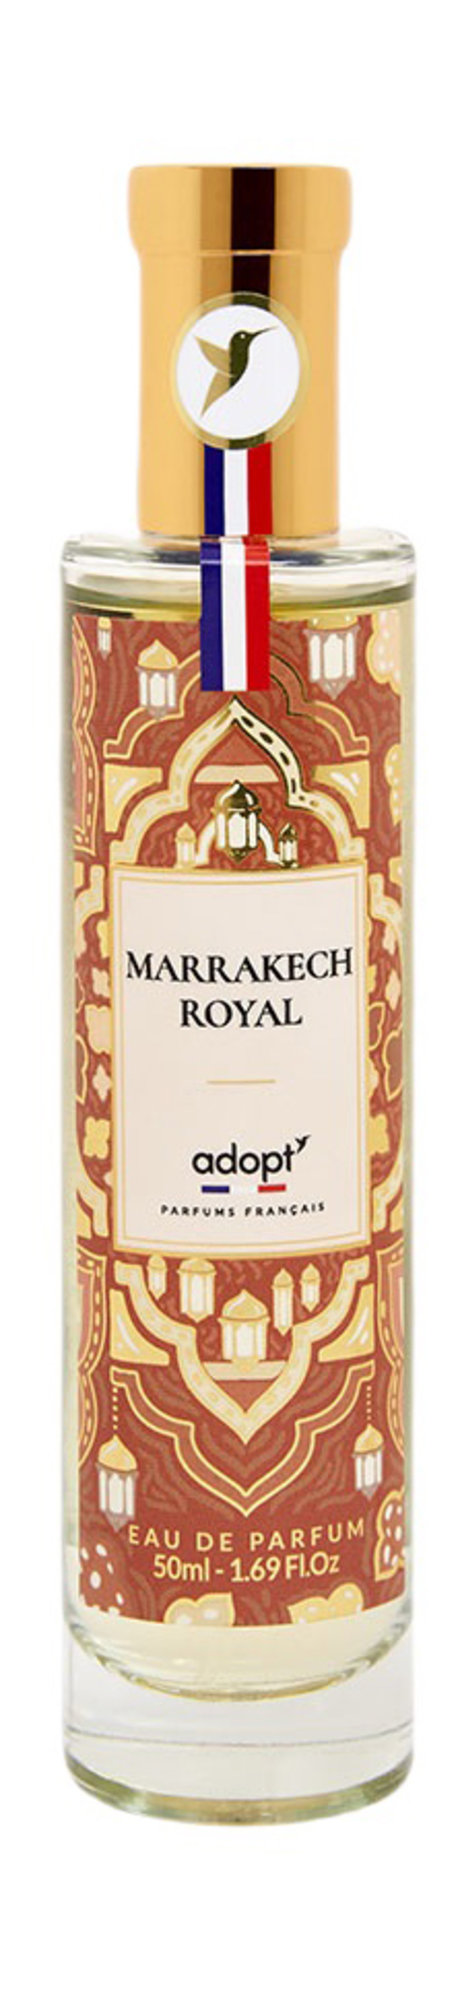 adopt marrakech royal eau de parfum